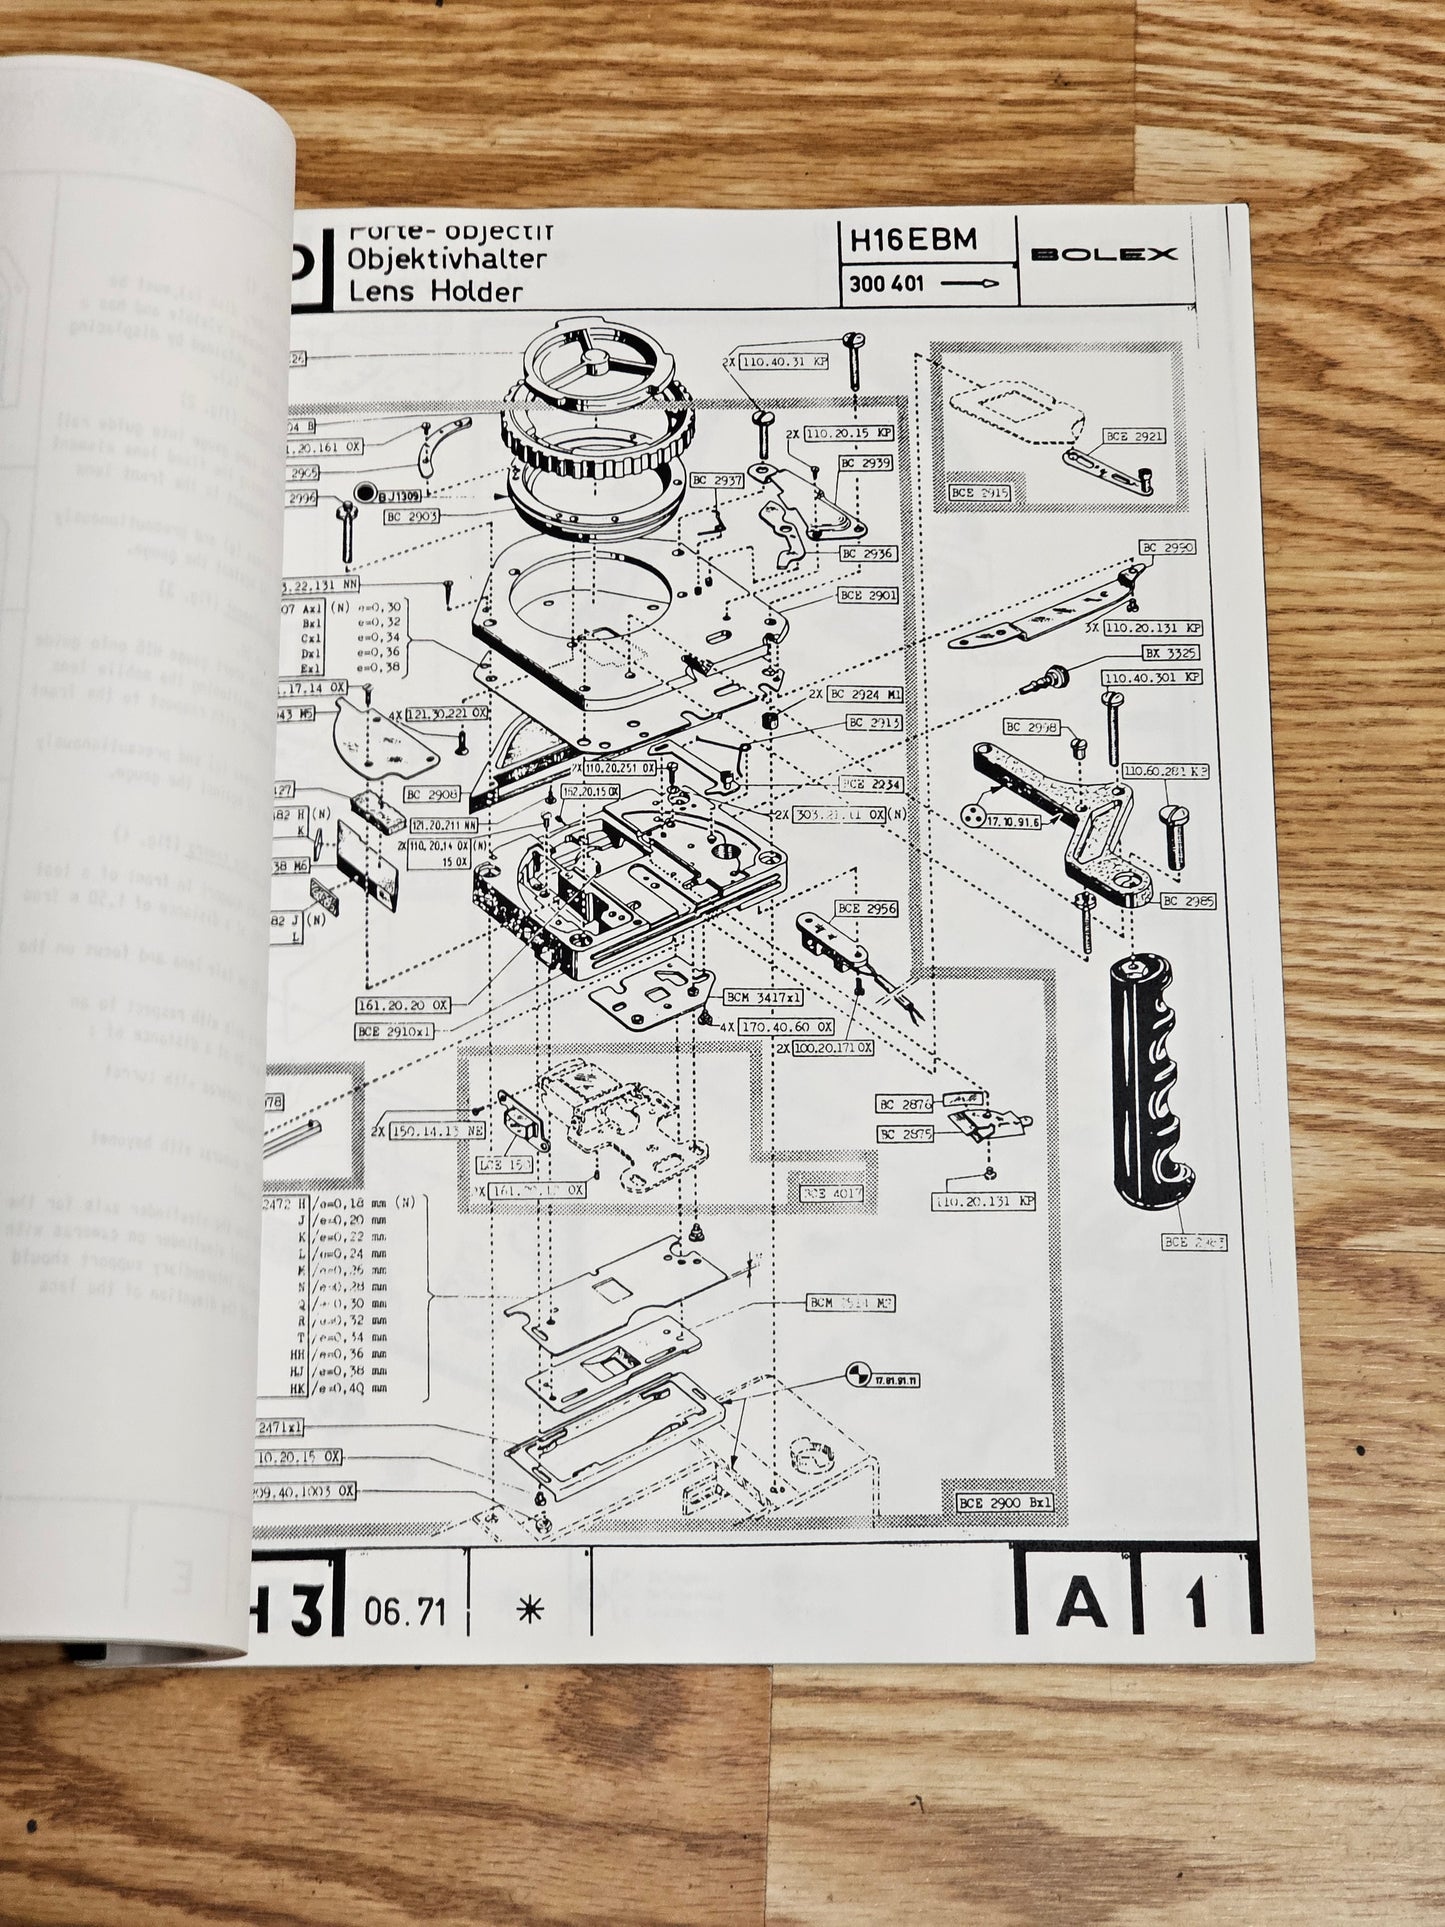 Bolex International S.A. Service Manual/ Parts Book 1971 Edition (Reproduced)